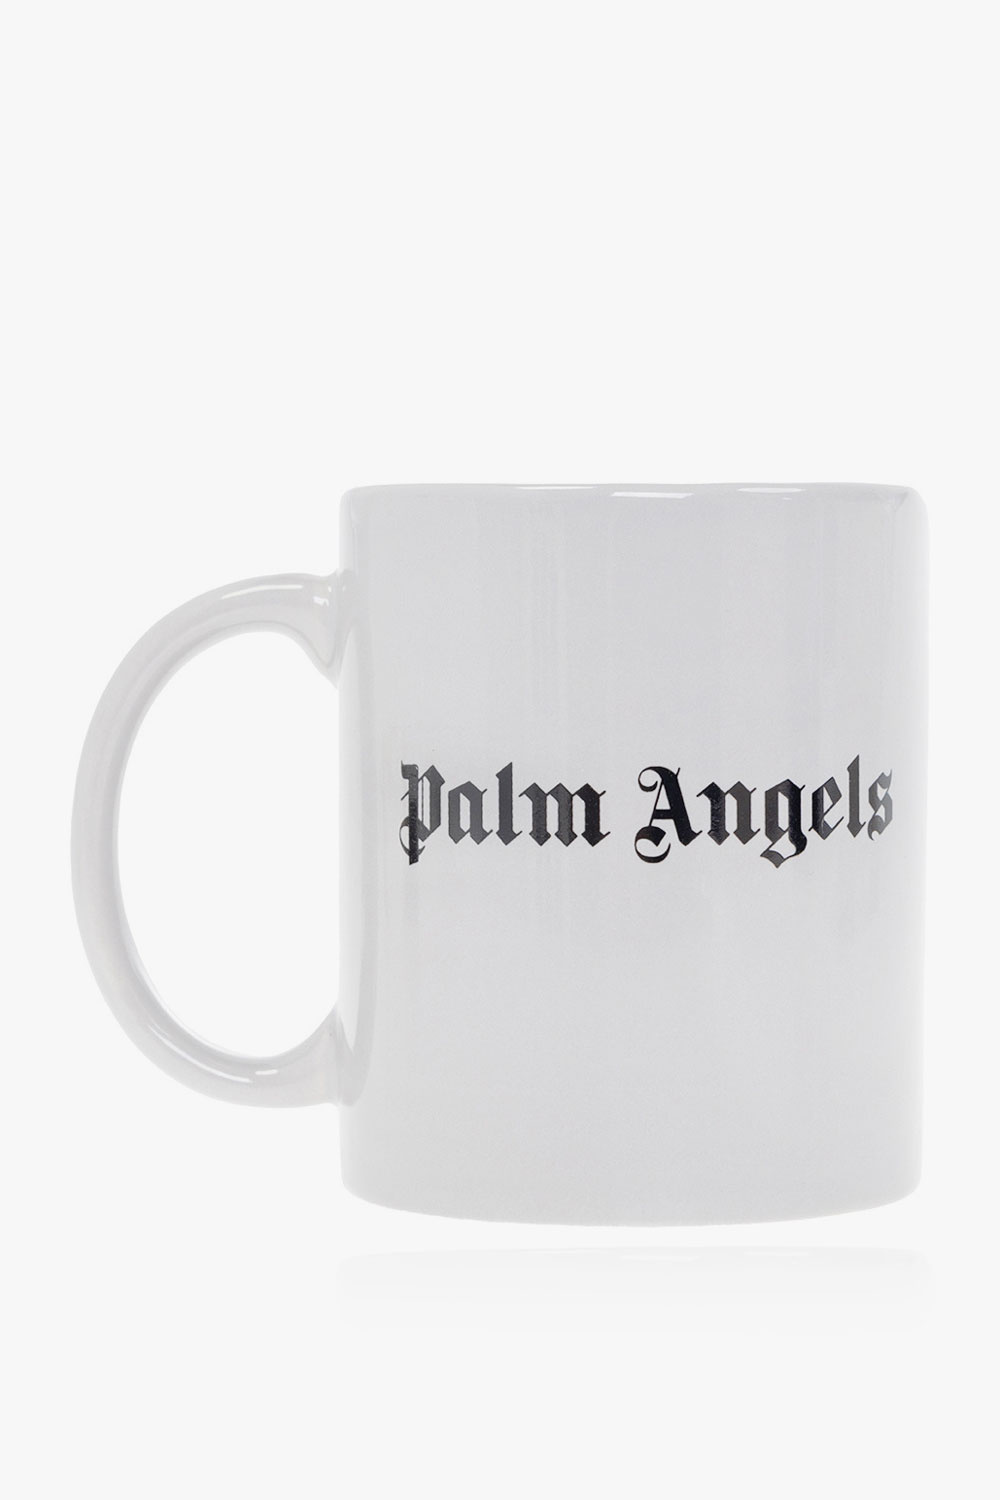 Palm Angels that redefines luxury